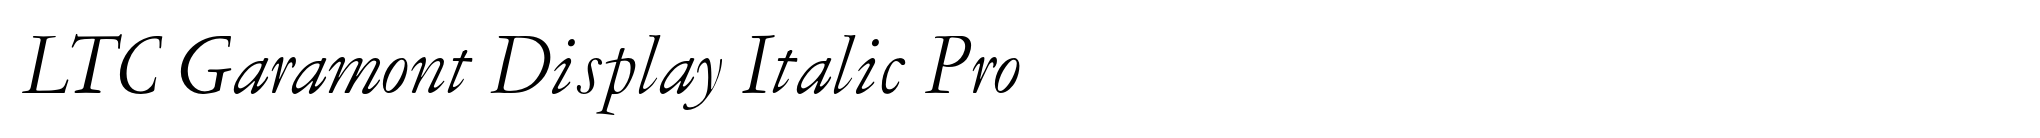 LTC Garamont Display Italic Pro image